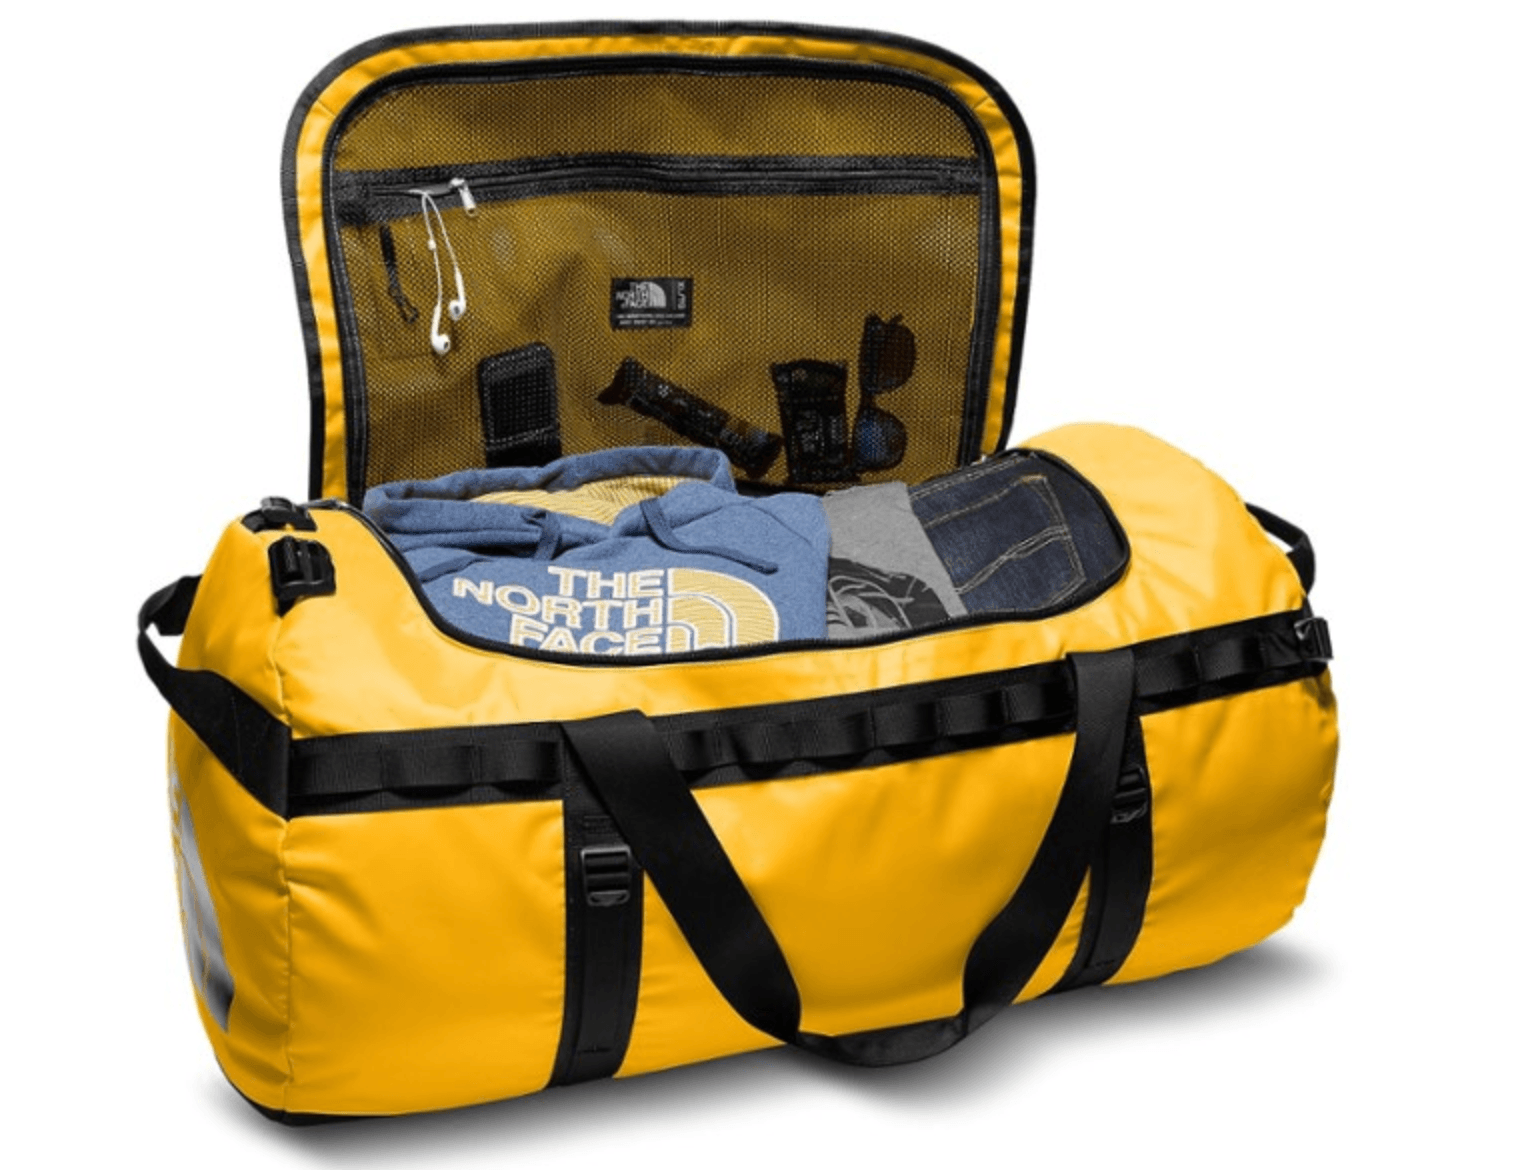 best duffel bag for camping